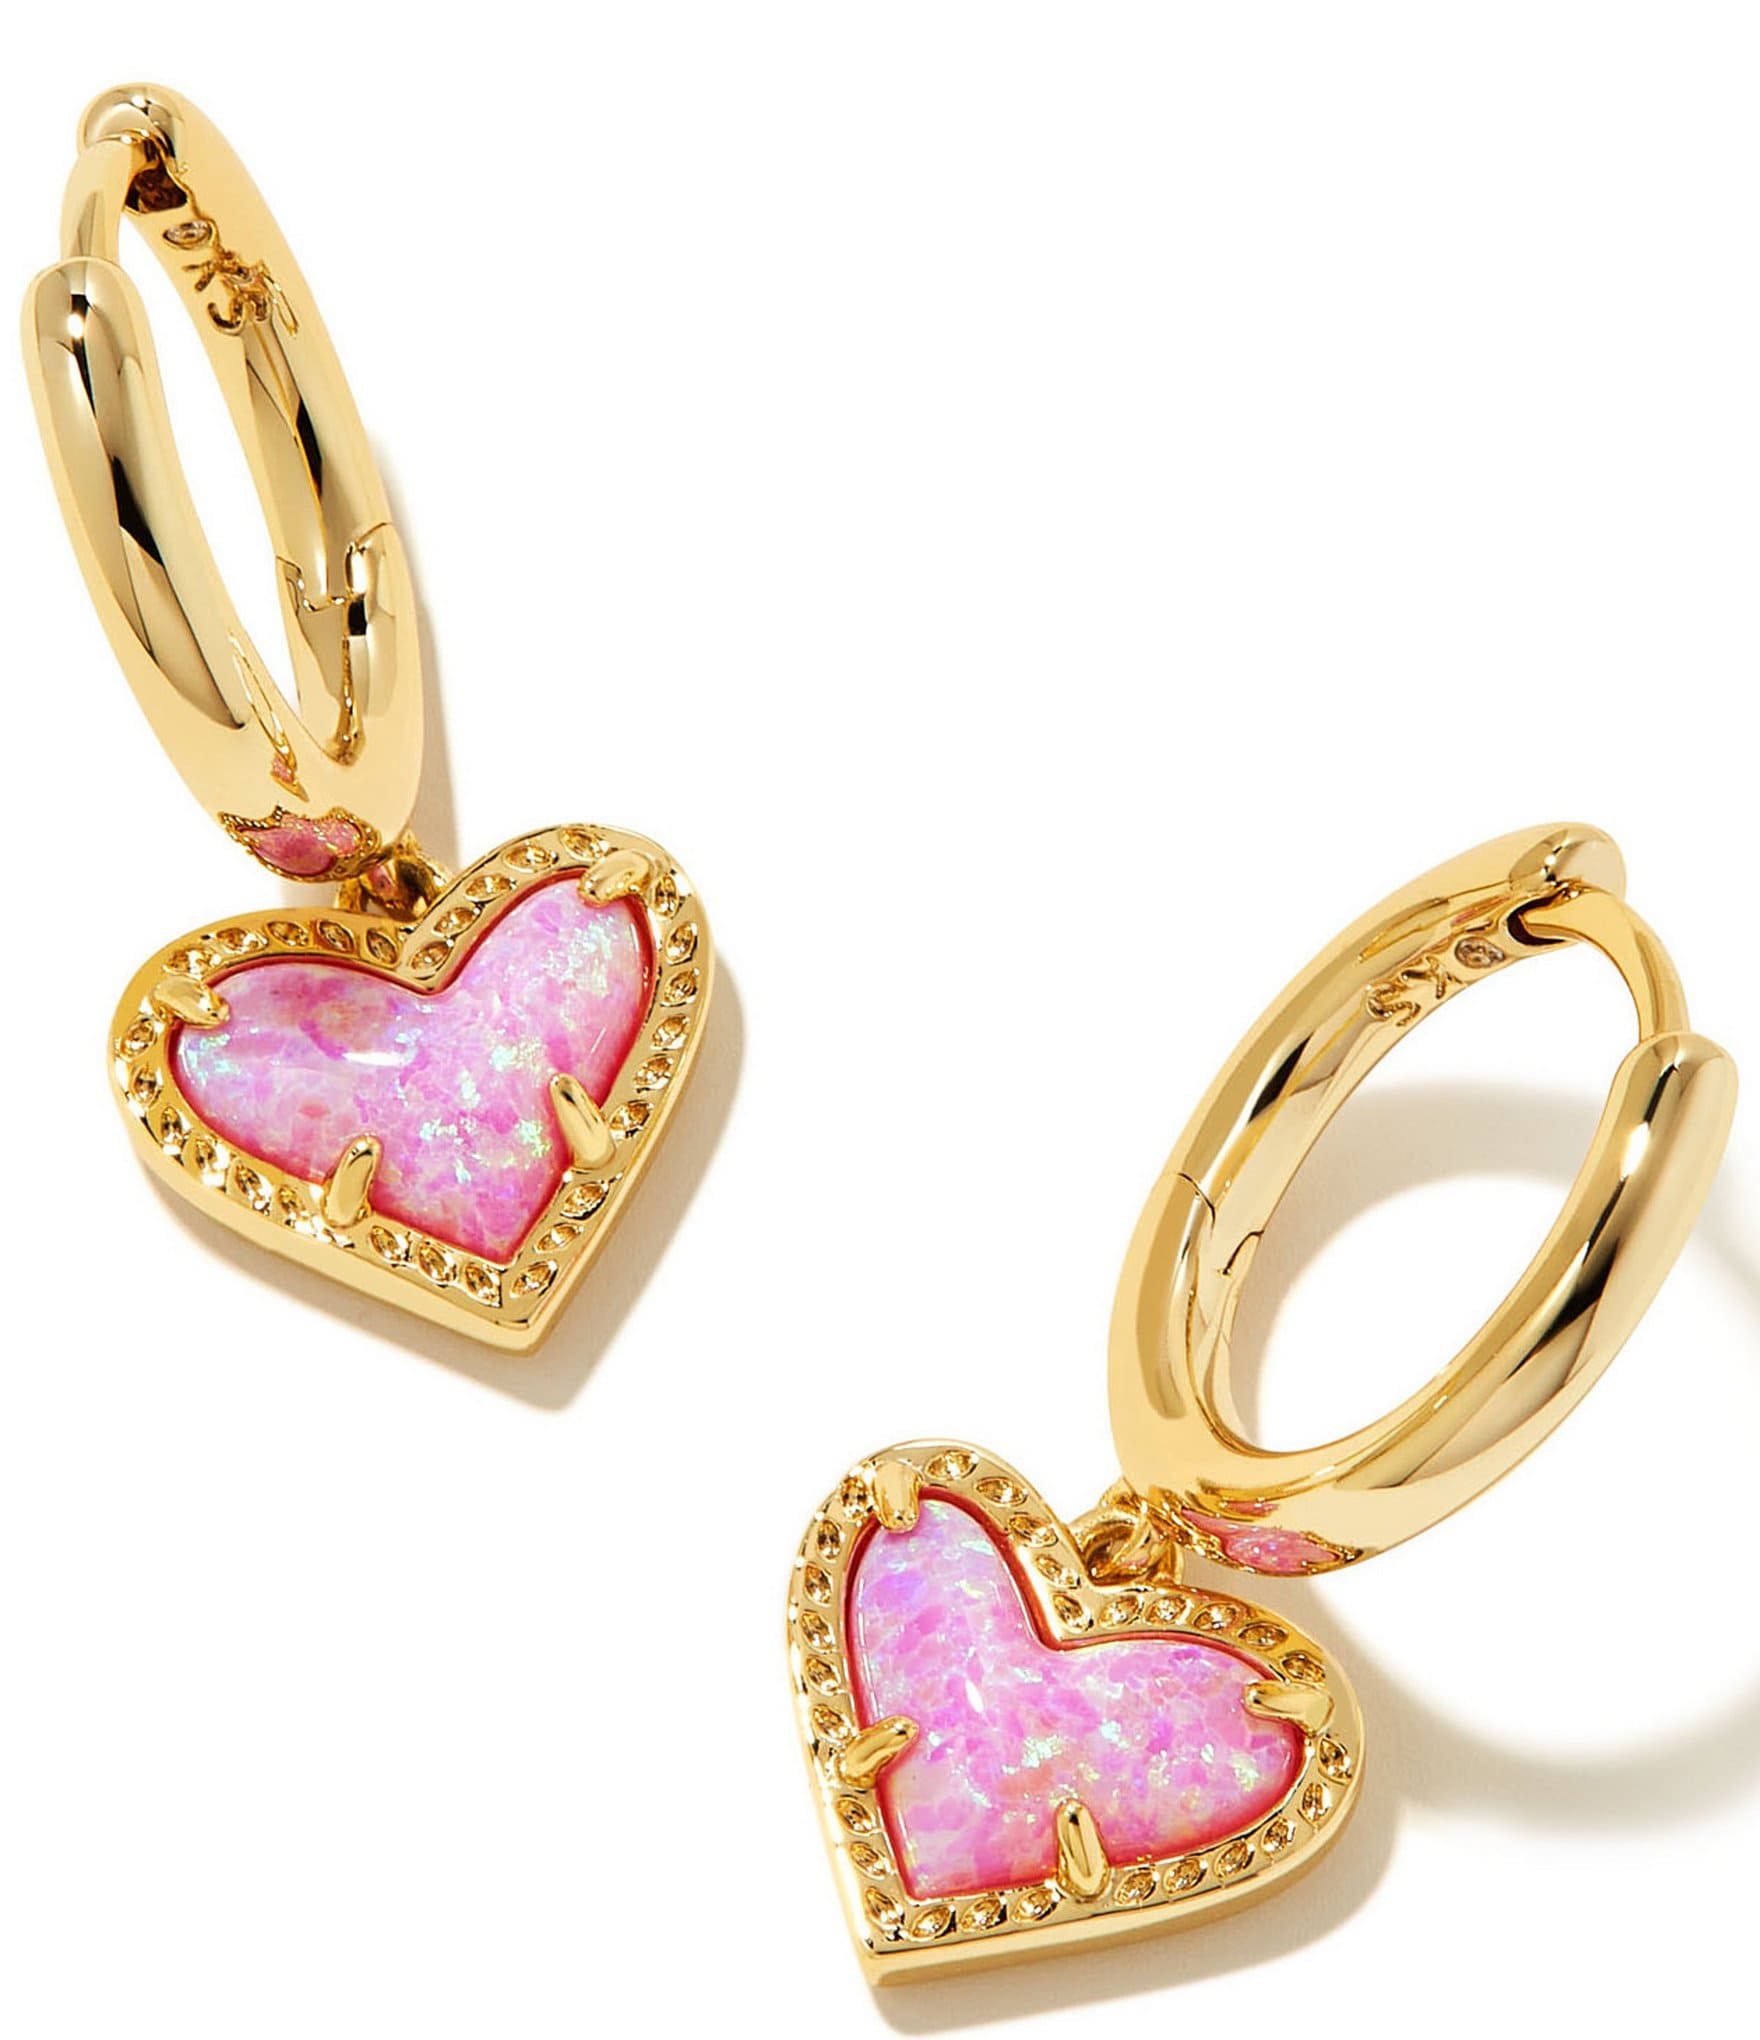 Kendra Scott Ari Heart Pendant Necklace Rose Gold Pink Drusy